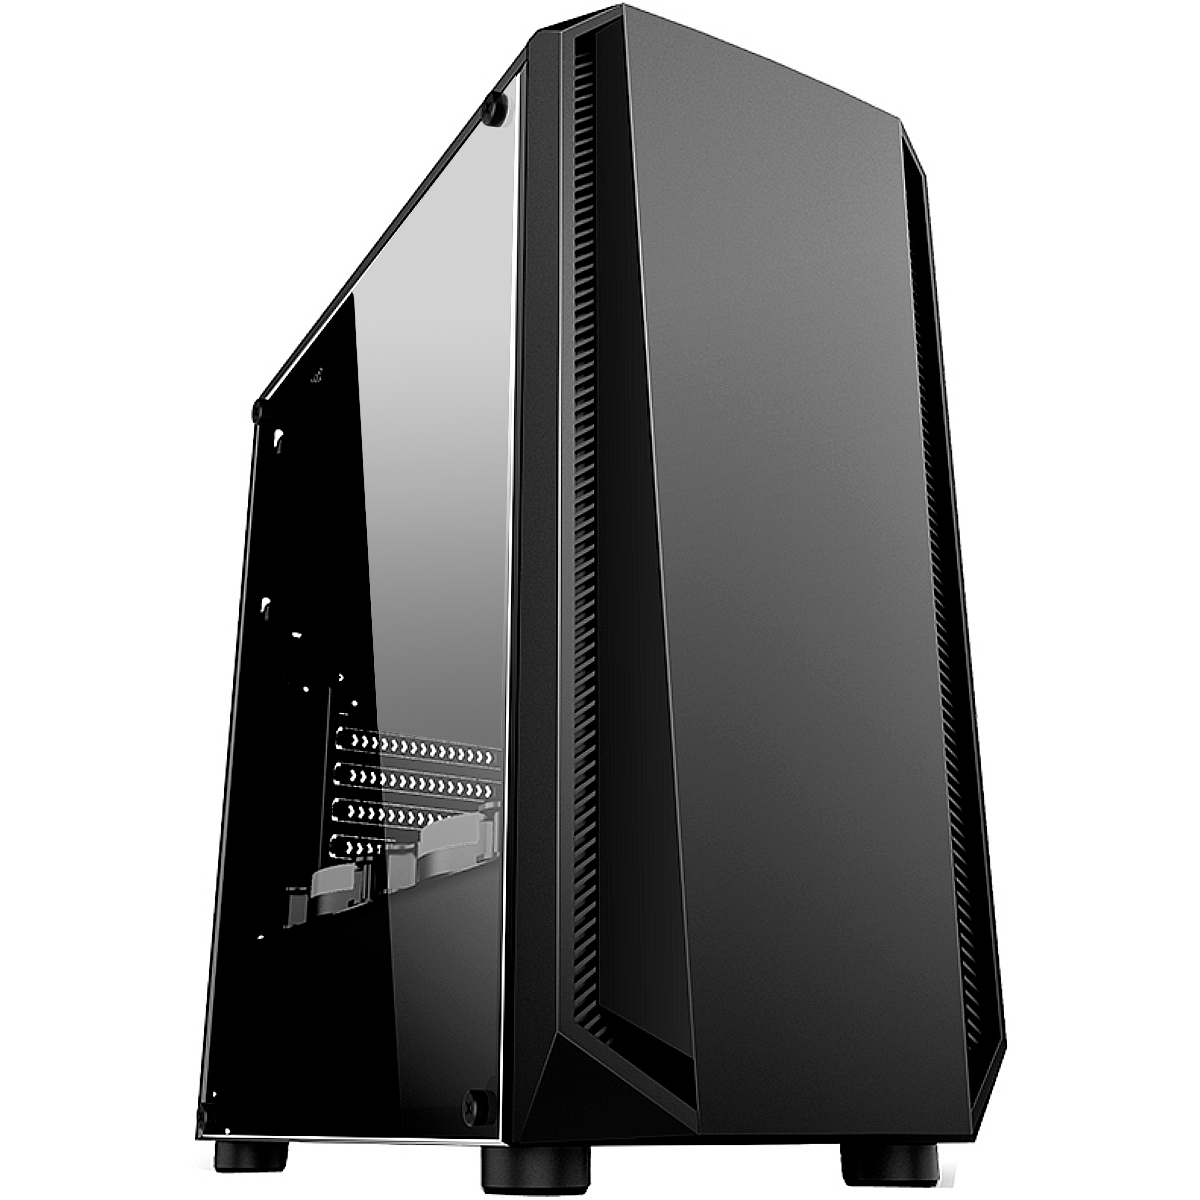 PC Gamer Ryzen 1600 - Asus Prime A320M-K/BR, RAM 16GB, SSD 240GB, AMD Radeon RX 570